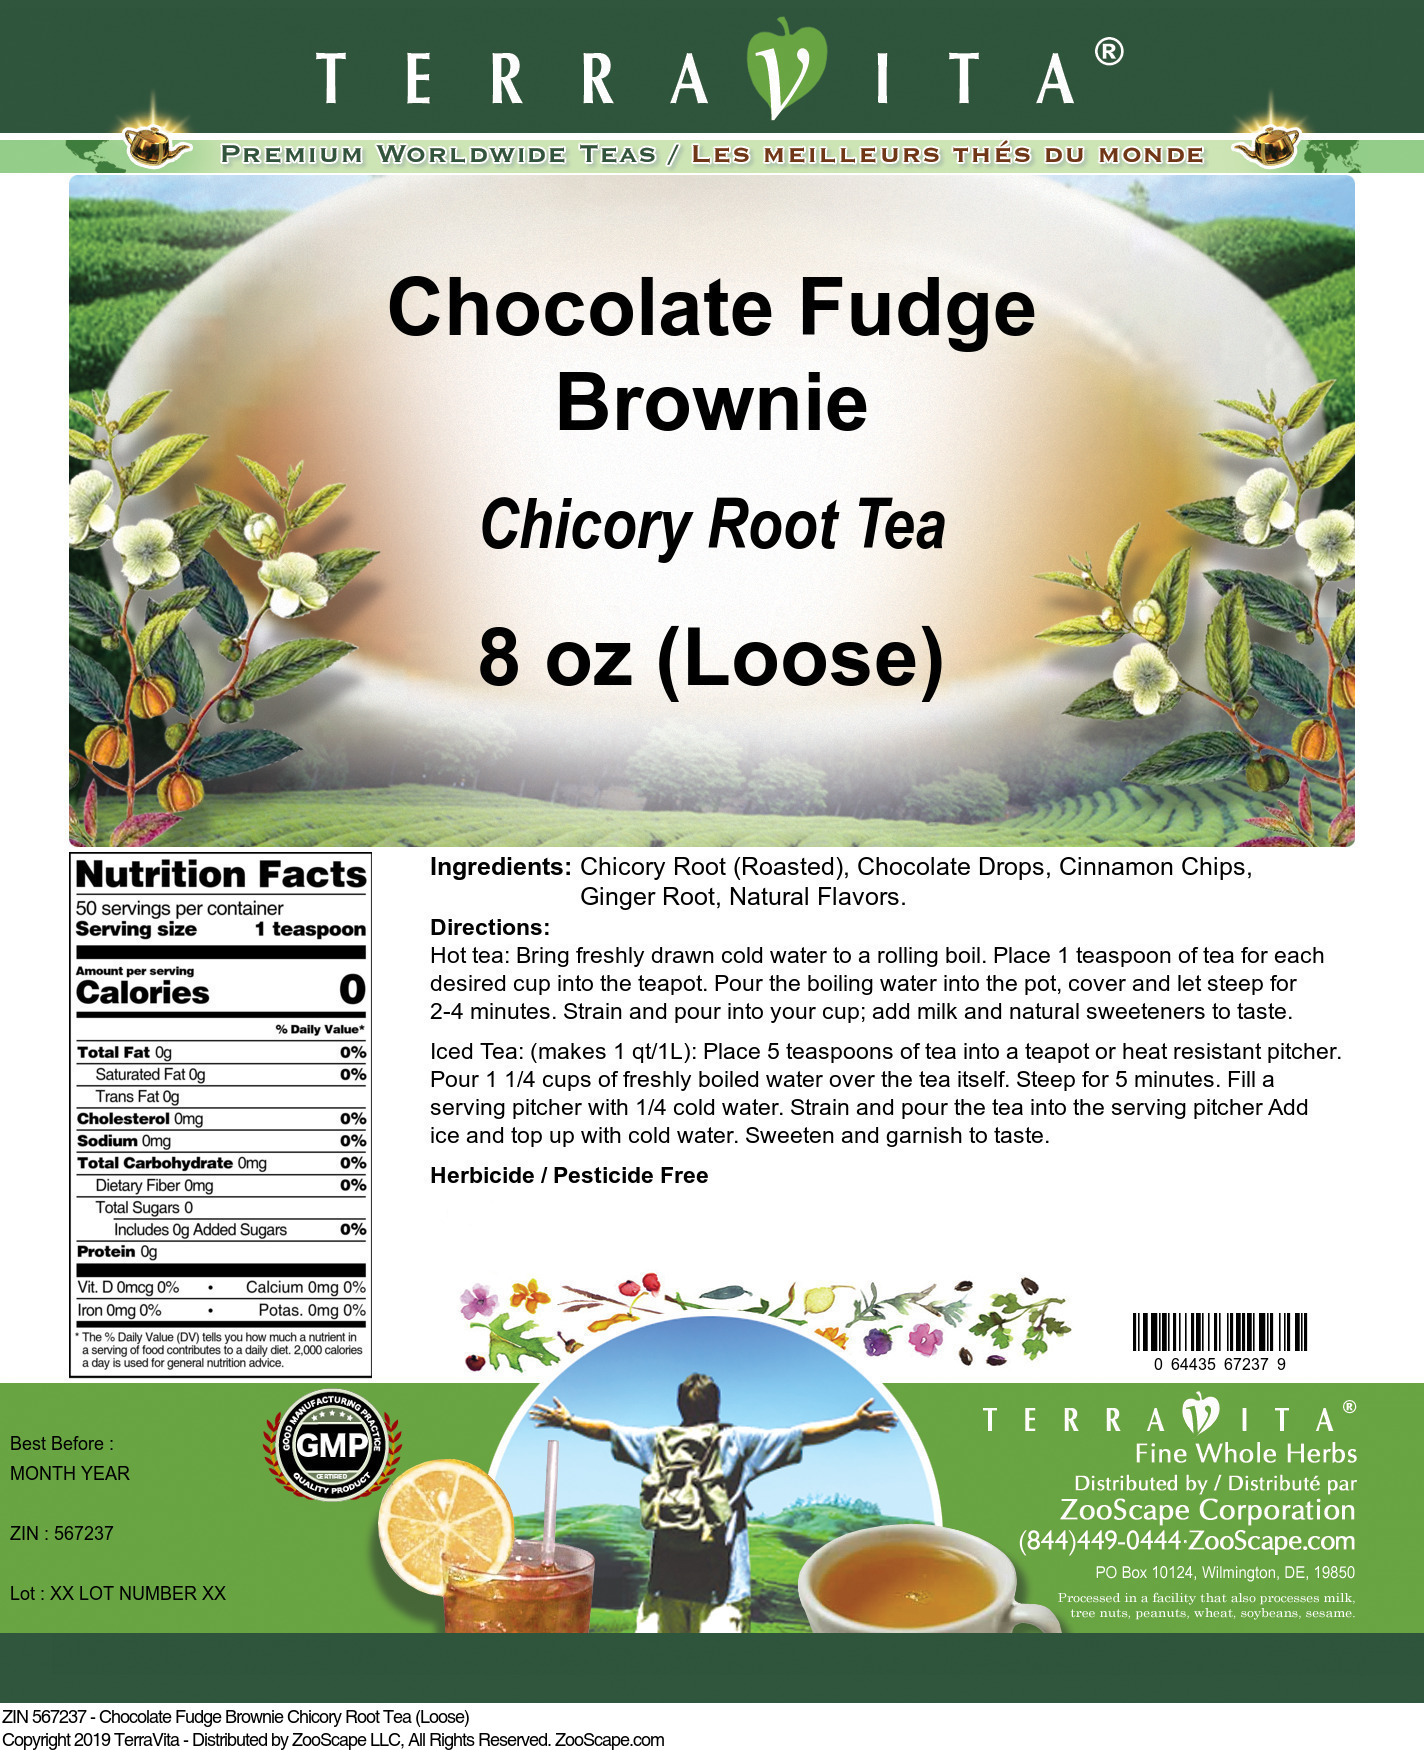 Chocolate Fudge Brownie Chicory Root Tea (Loose) - Label